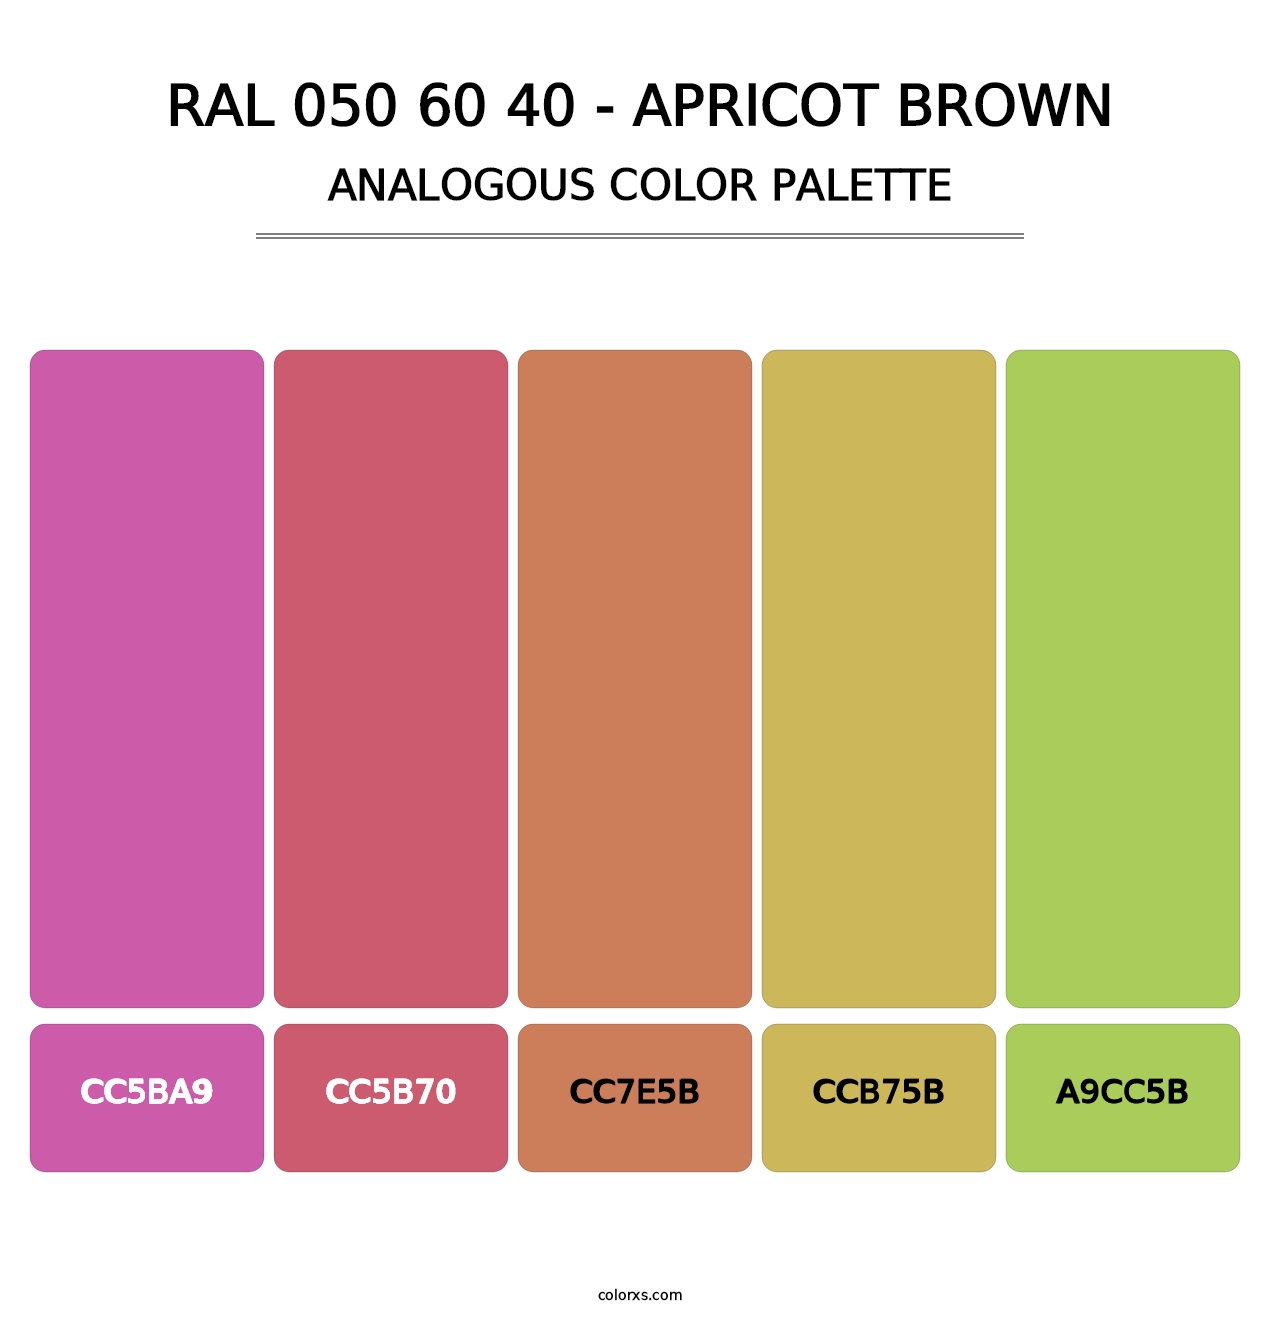 RAL 050 60 40 - Apricot Brown - Analogous Color Palette